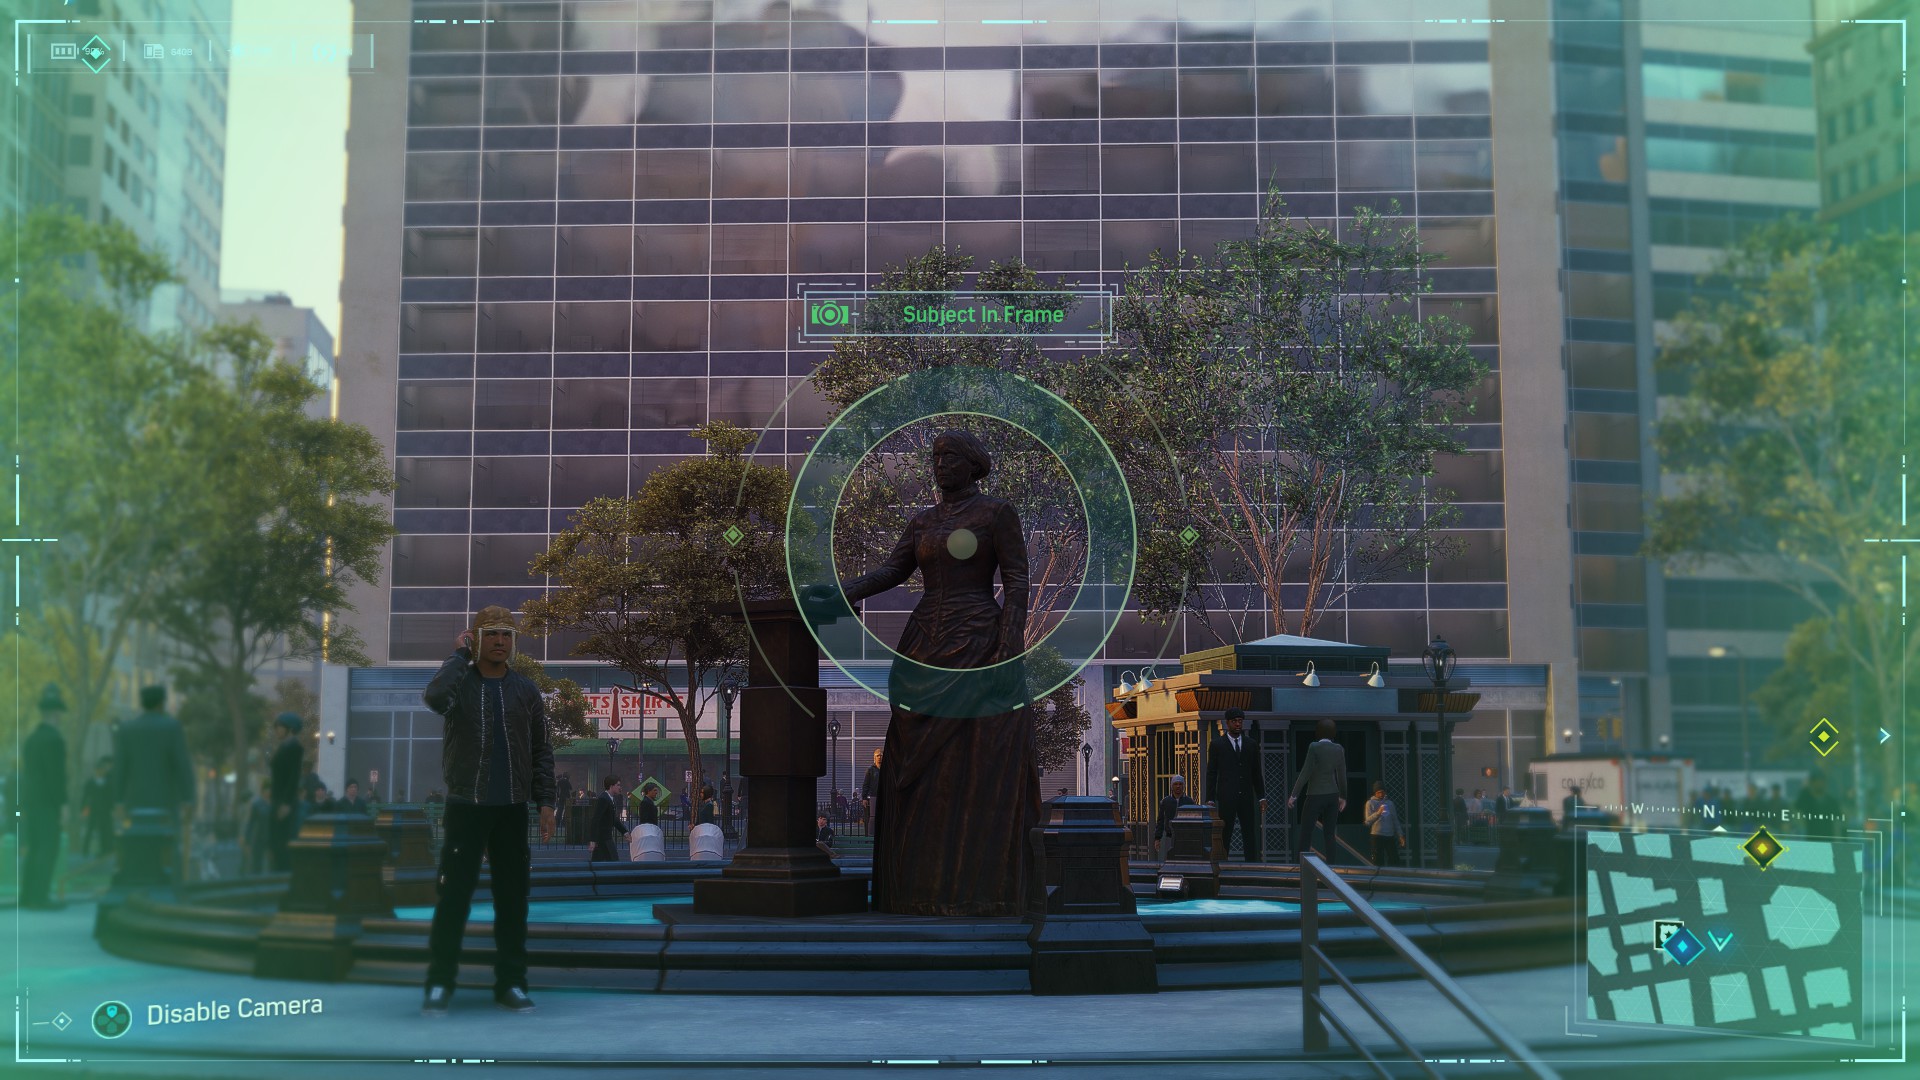 Spider-Man Secret Photo Op of a statue